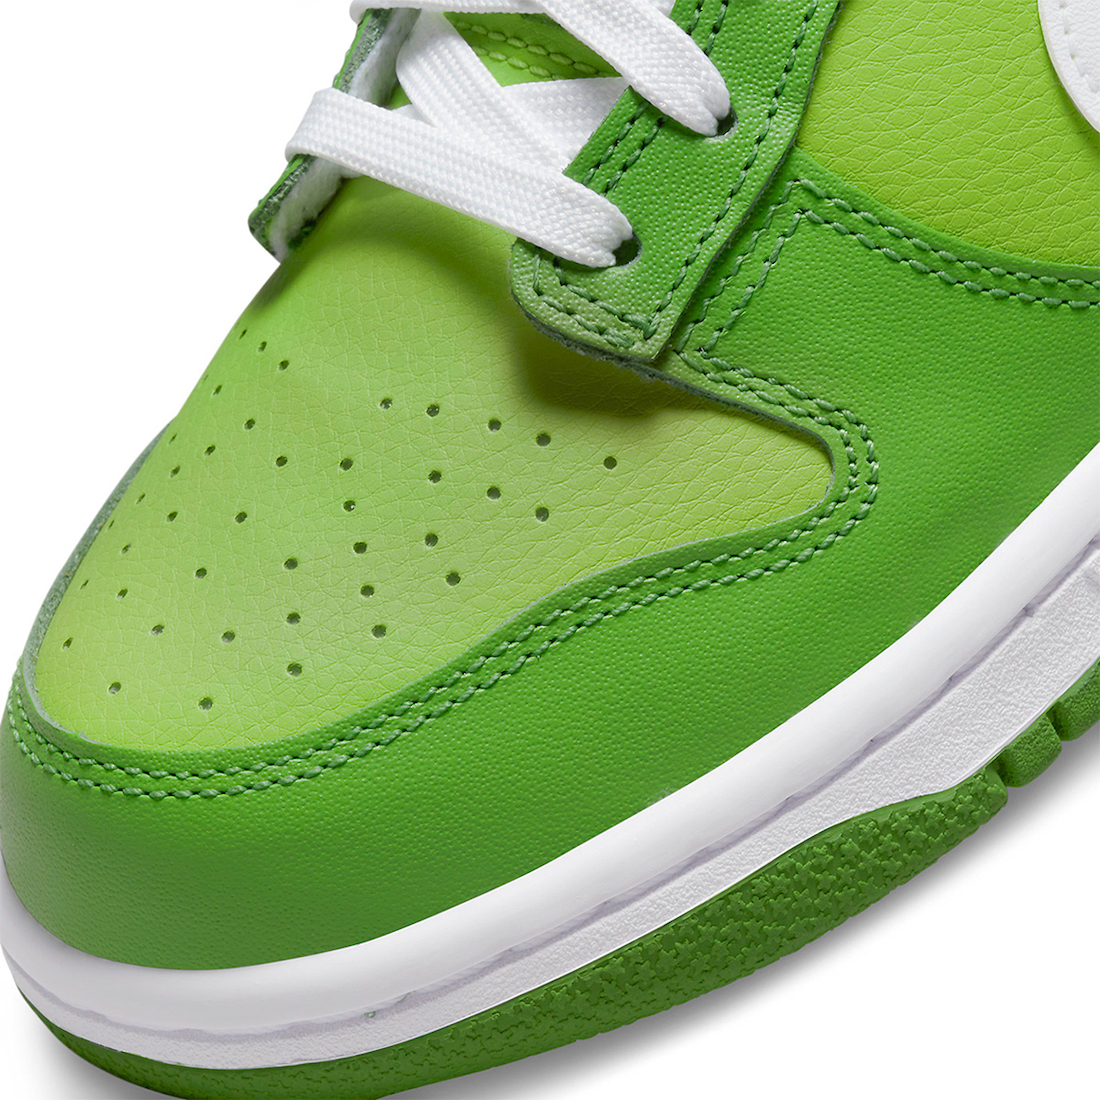 Nike Dunk Low Green White DJ6188-301 Release Date